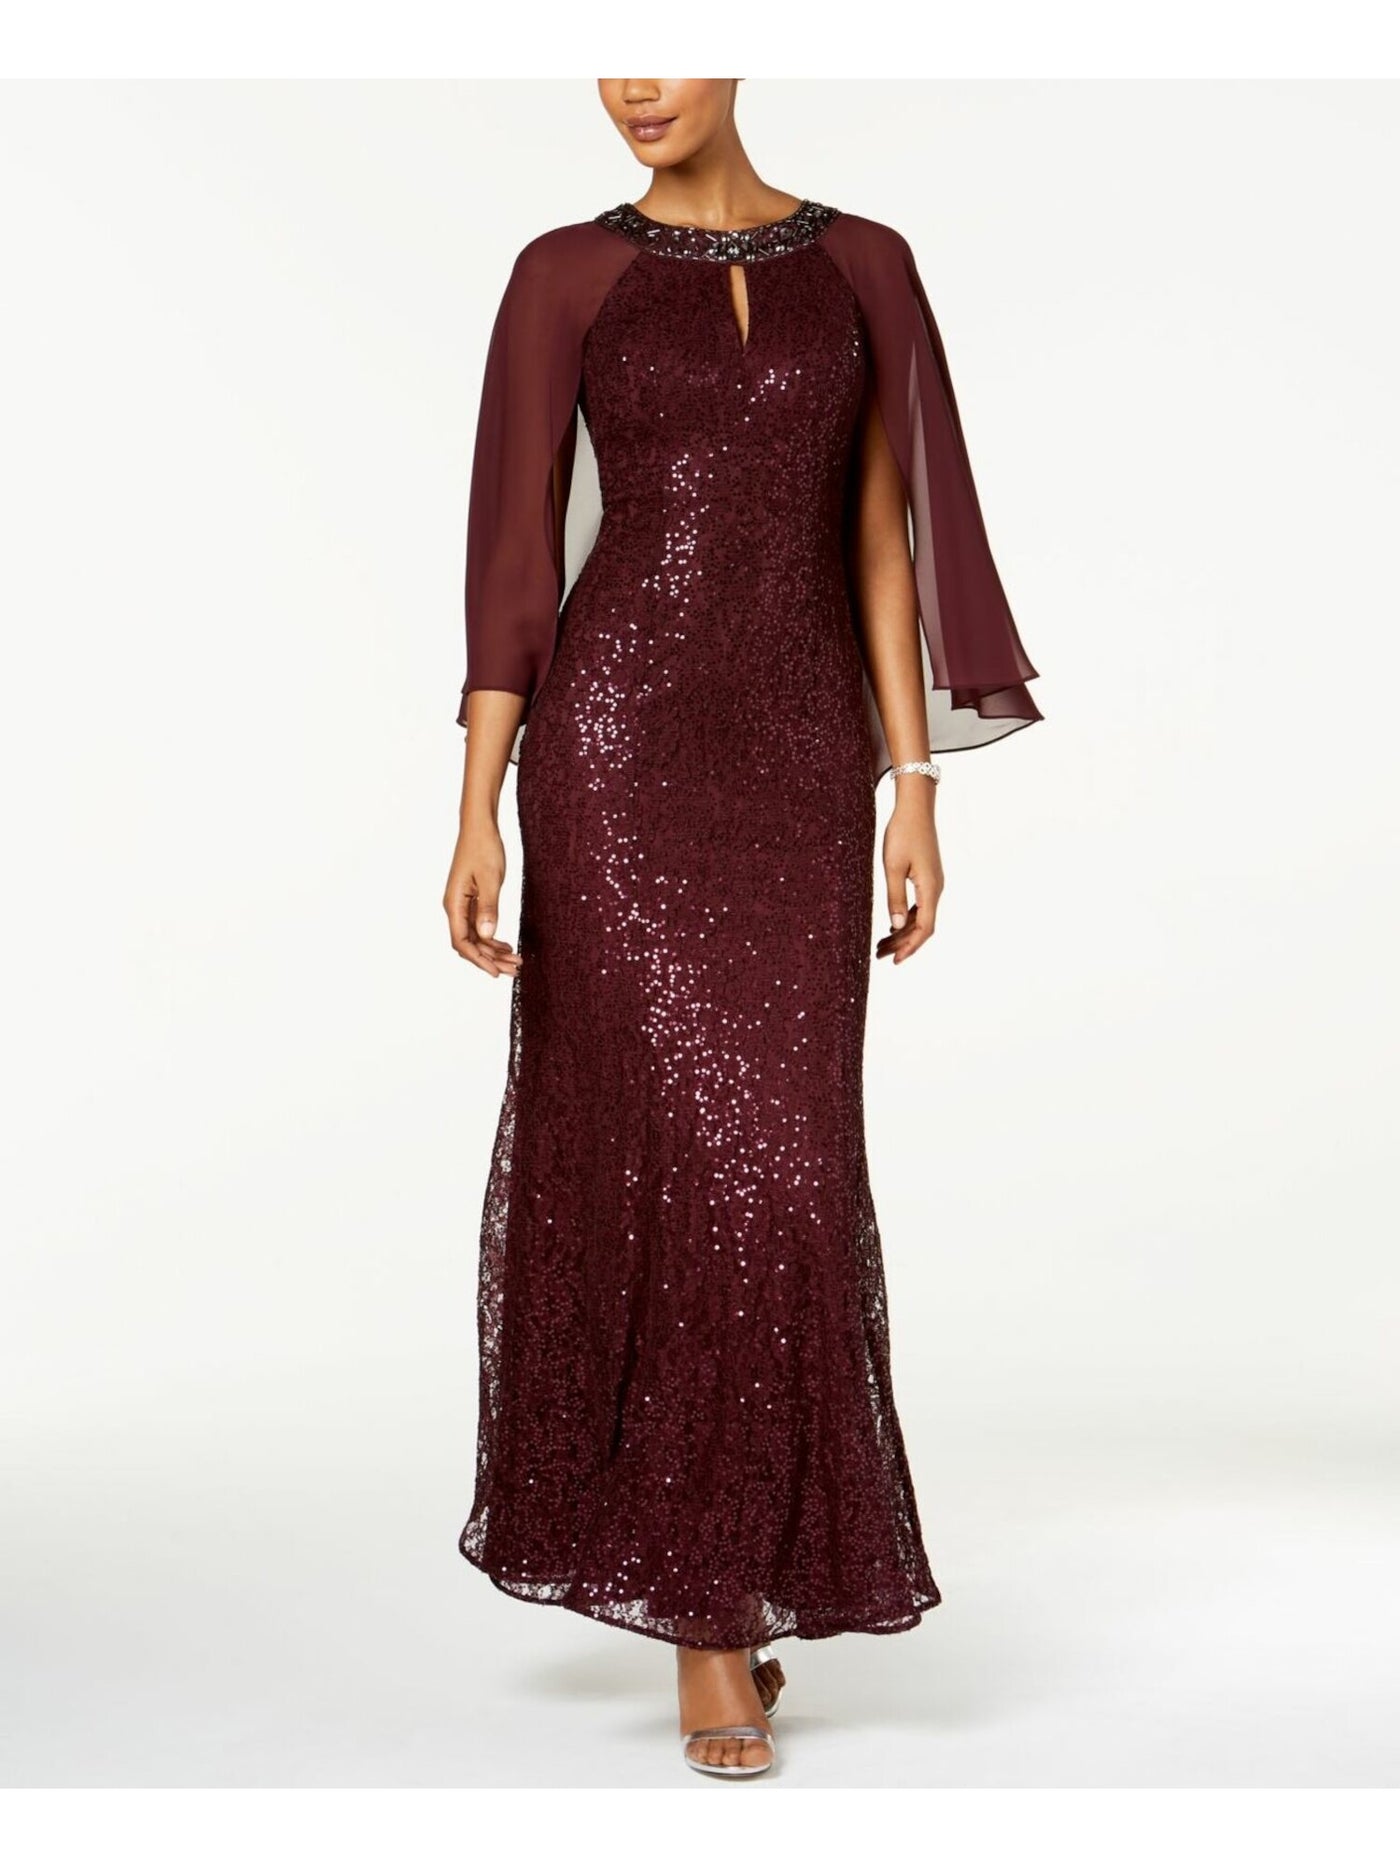 SLNY Womens Burgundy Sequined Lace Sleeveless Keyhole Maxi Formal Fit + Flare Dress 6